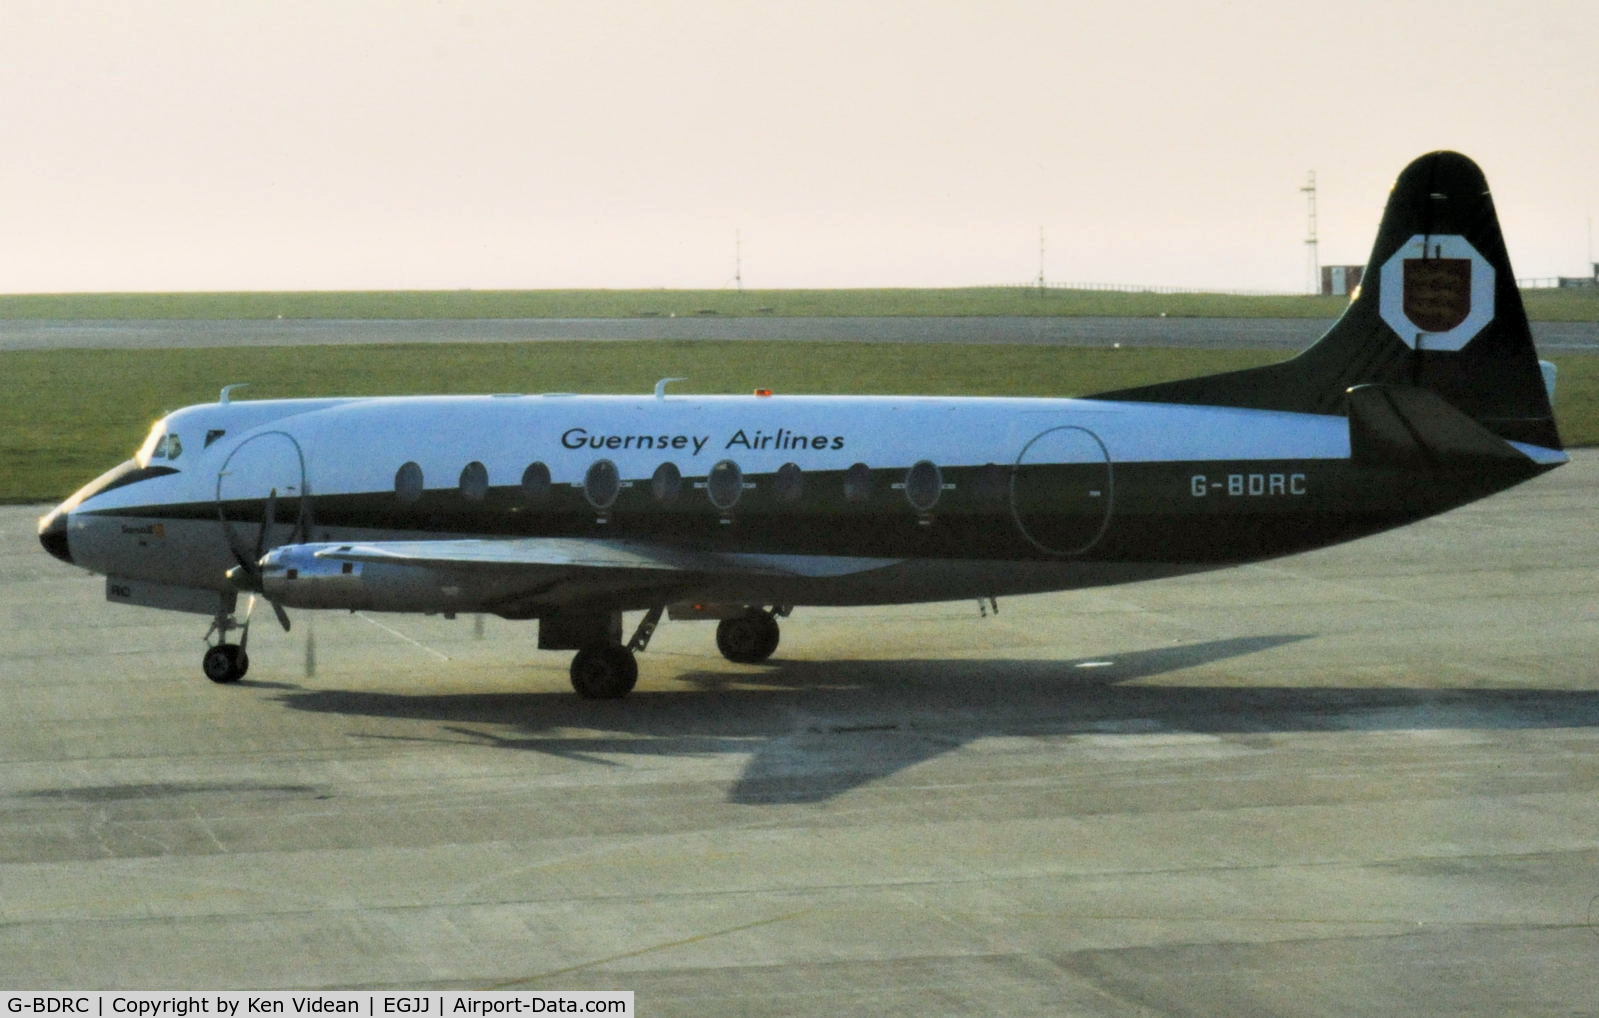 G-BDRC, 1955 Vickers Viscount 724 C/N 52, Leased from Alidair.